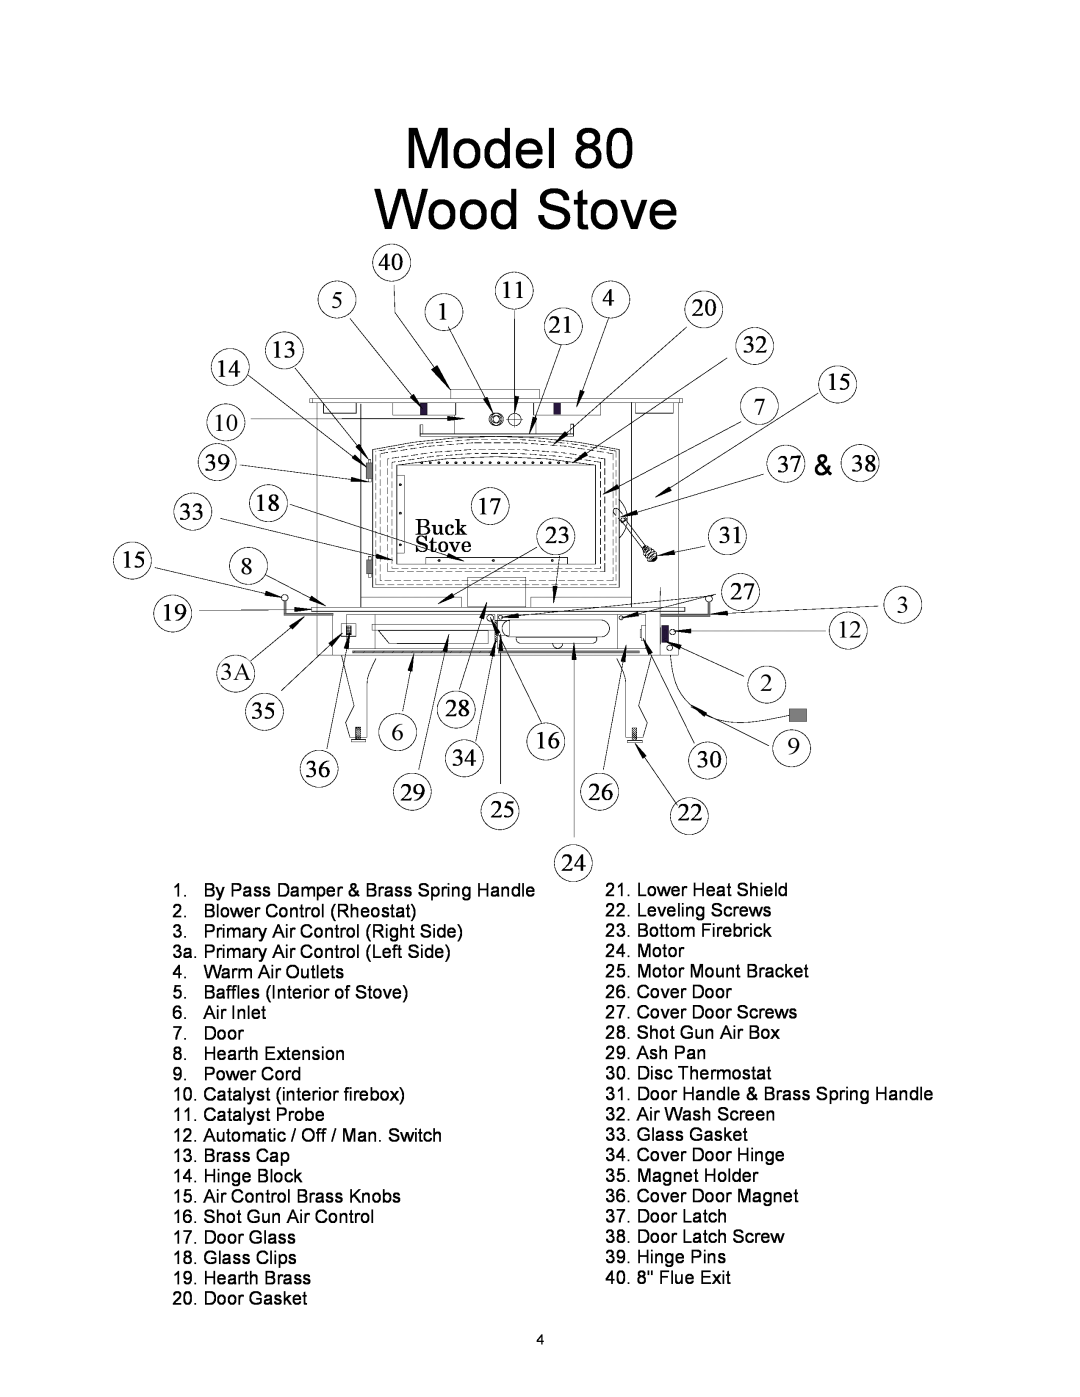 New Buck Corporation Heater Model 80 manual Model 80 Wood Stove 